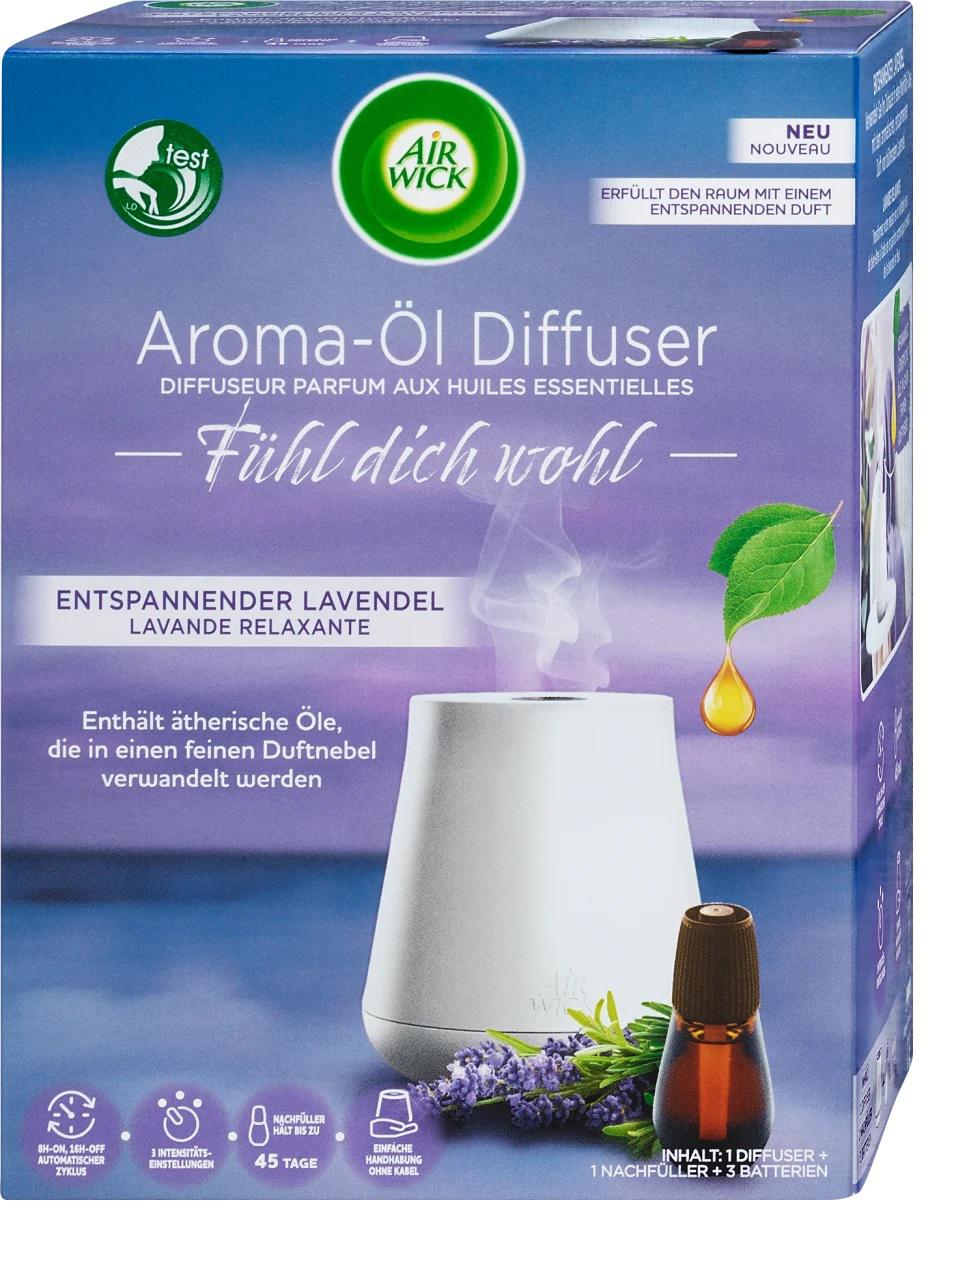 Air Wick Aroma-Öl Diffuser Starter-Set - Entspannender Lavendel - 20ml